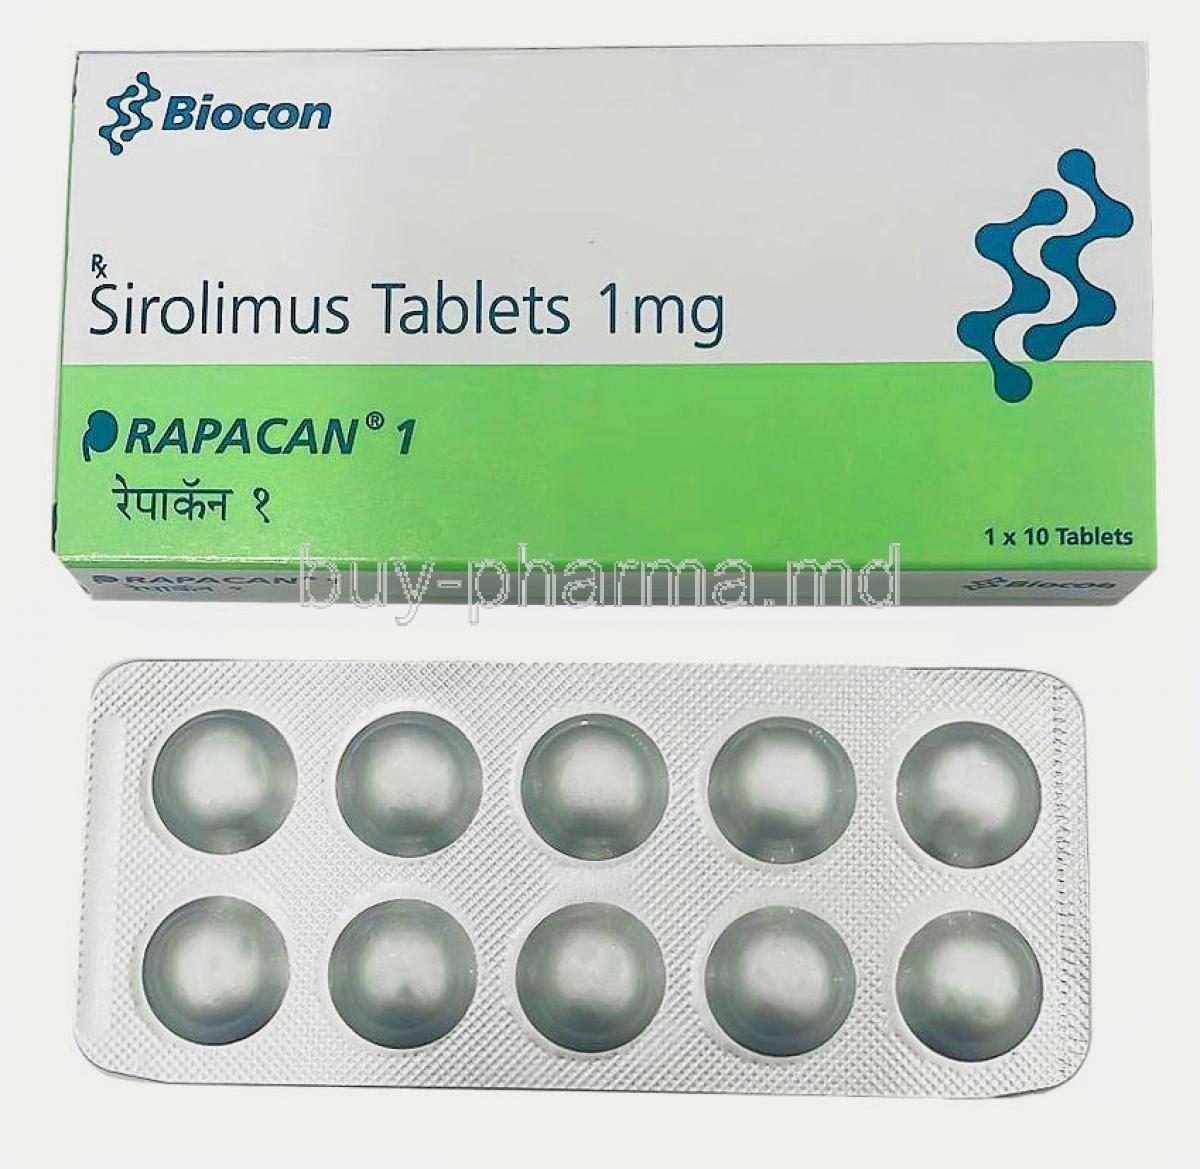 Rapacan, Sirolimus(Rapamycin) 1 mg, Biocon, Box, Blisterpack